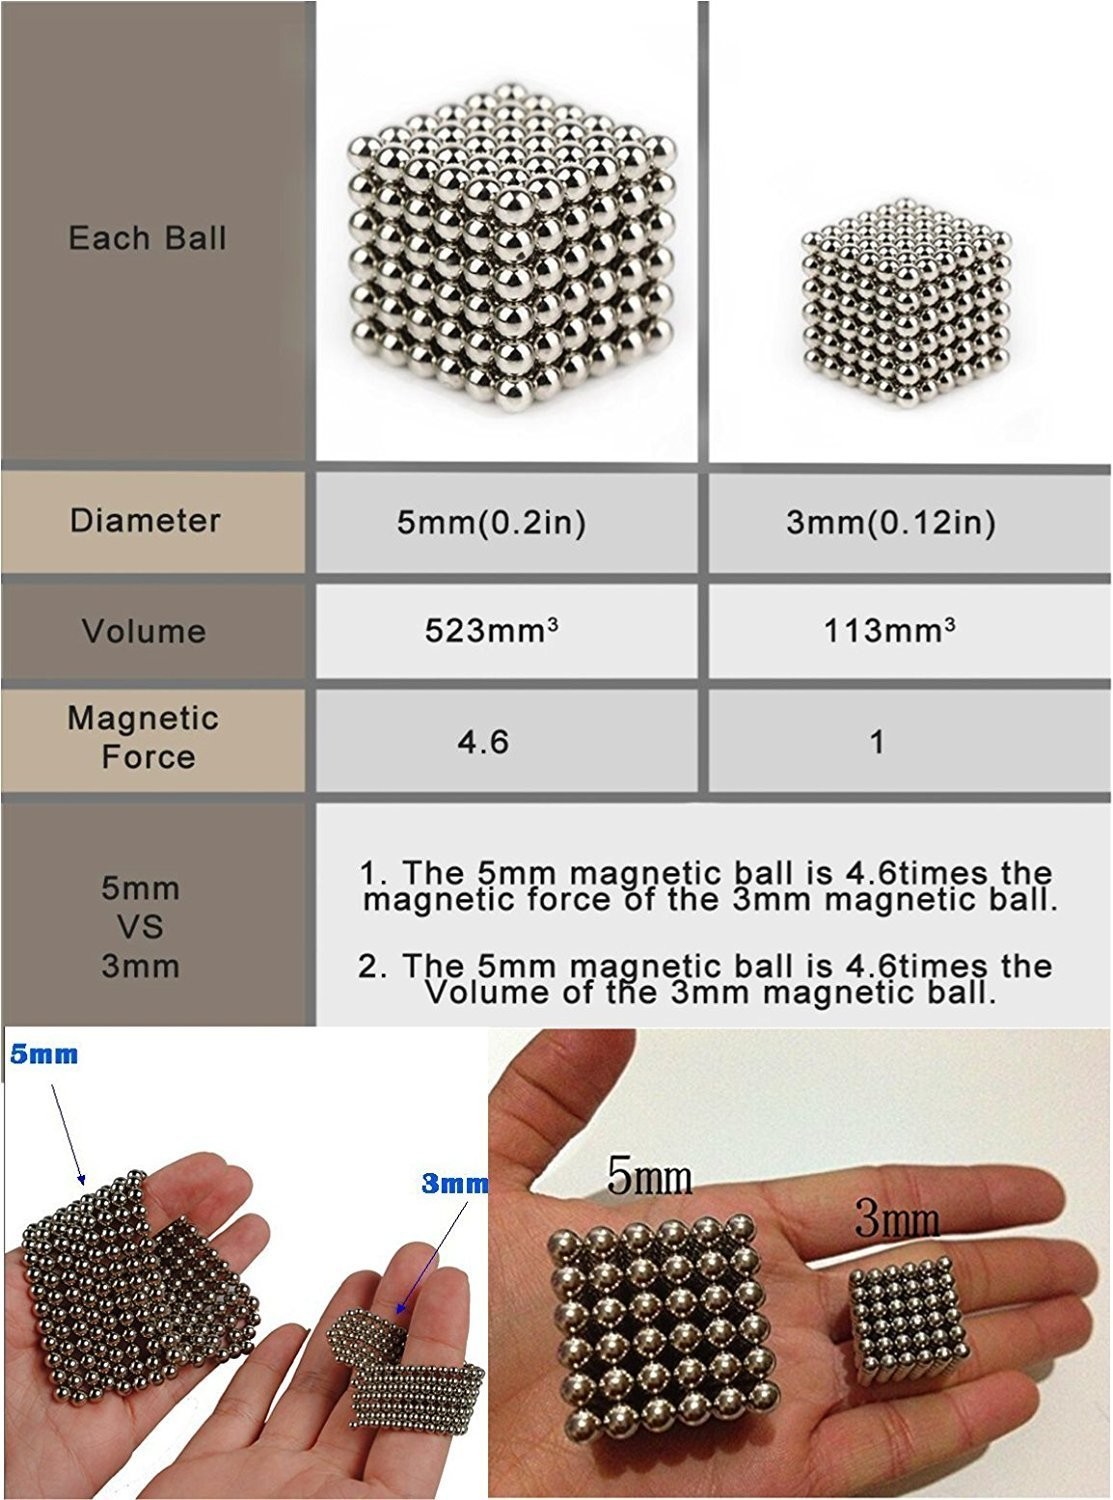 216 3mm magnetic balls